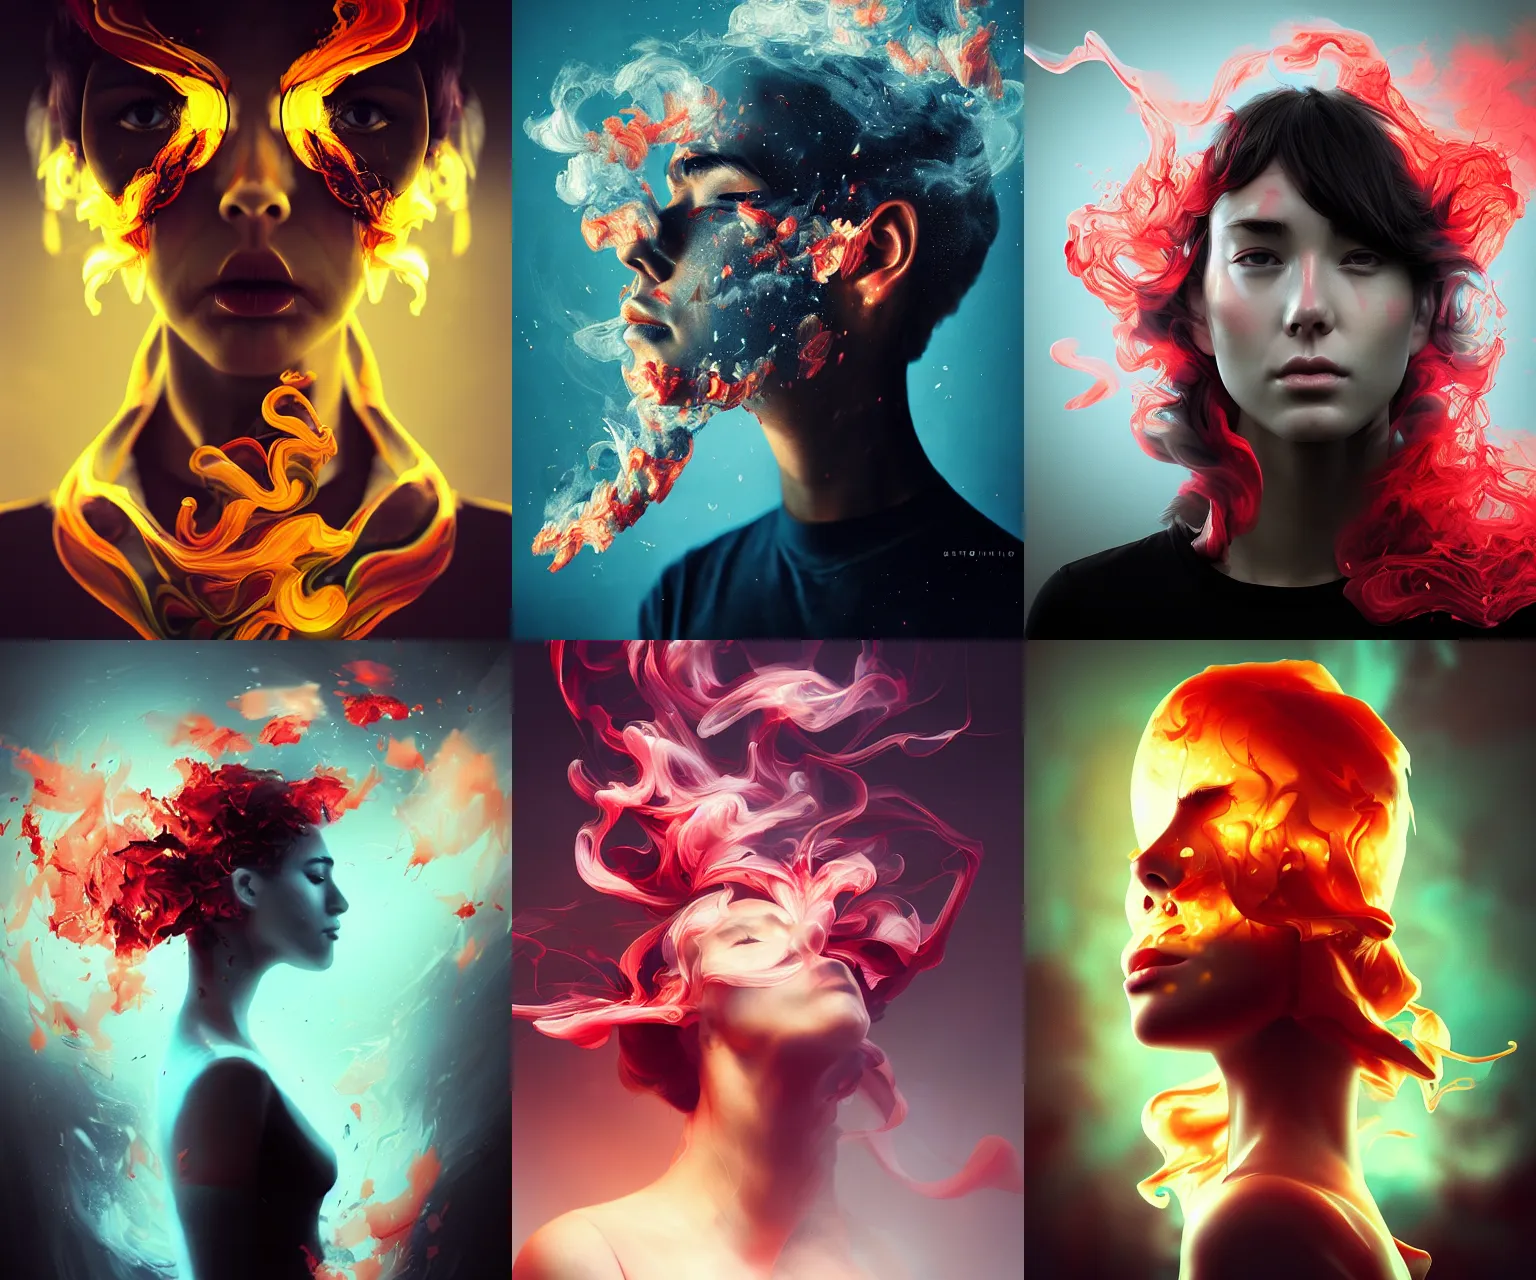 Prompt: flowery liquid smoke explosion double - exposure portrait, artgerm, bastien grivet, photorealism, radiant lighting, artstation